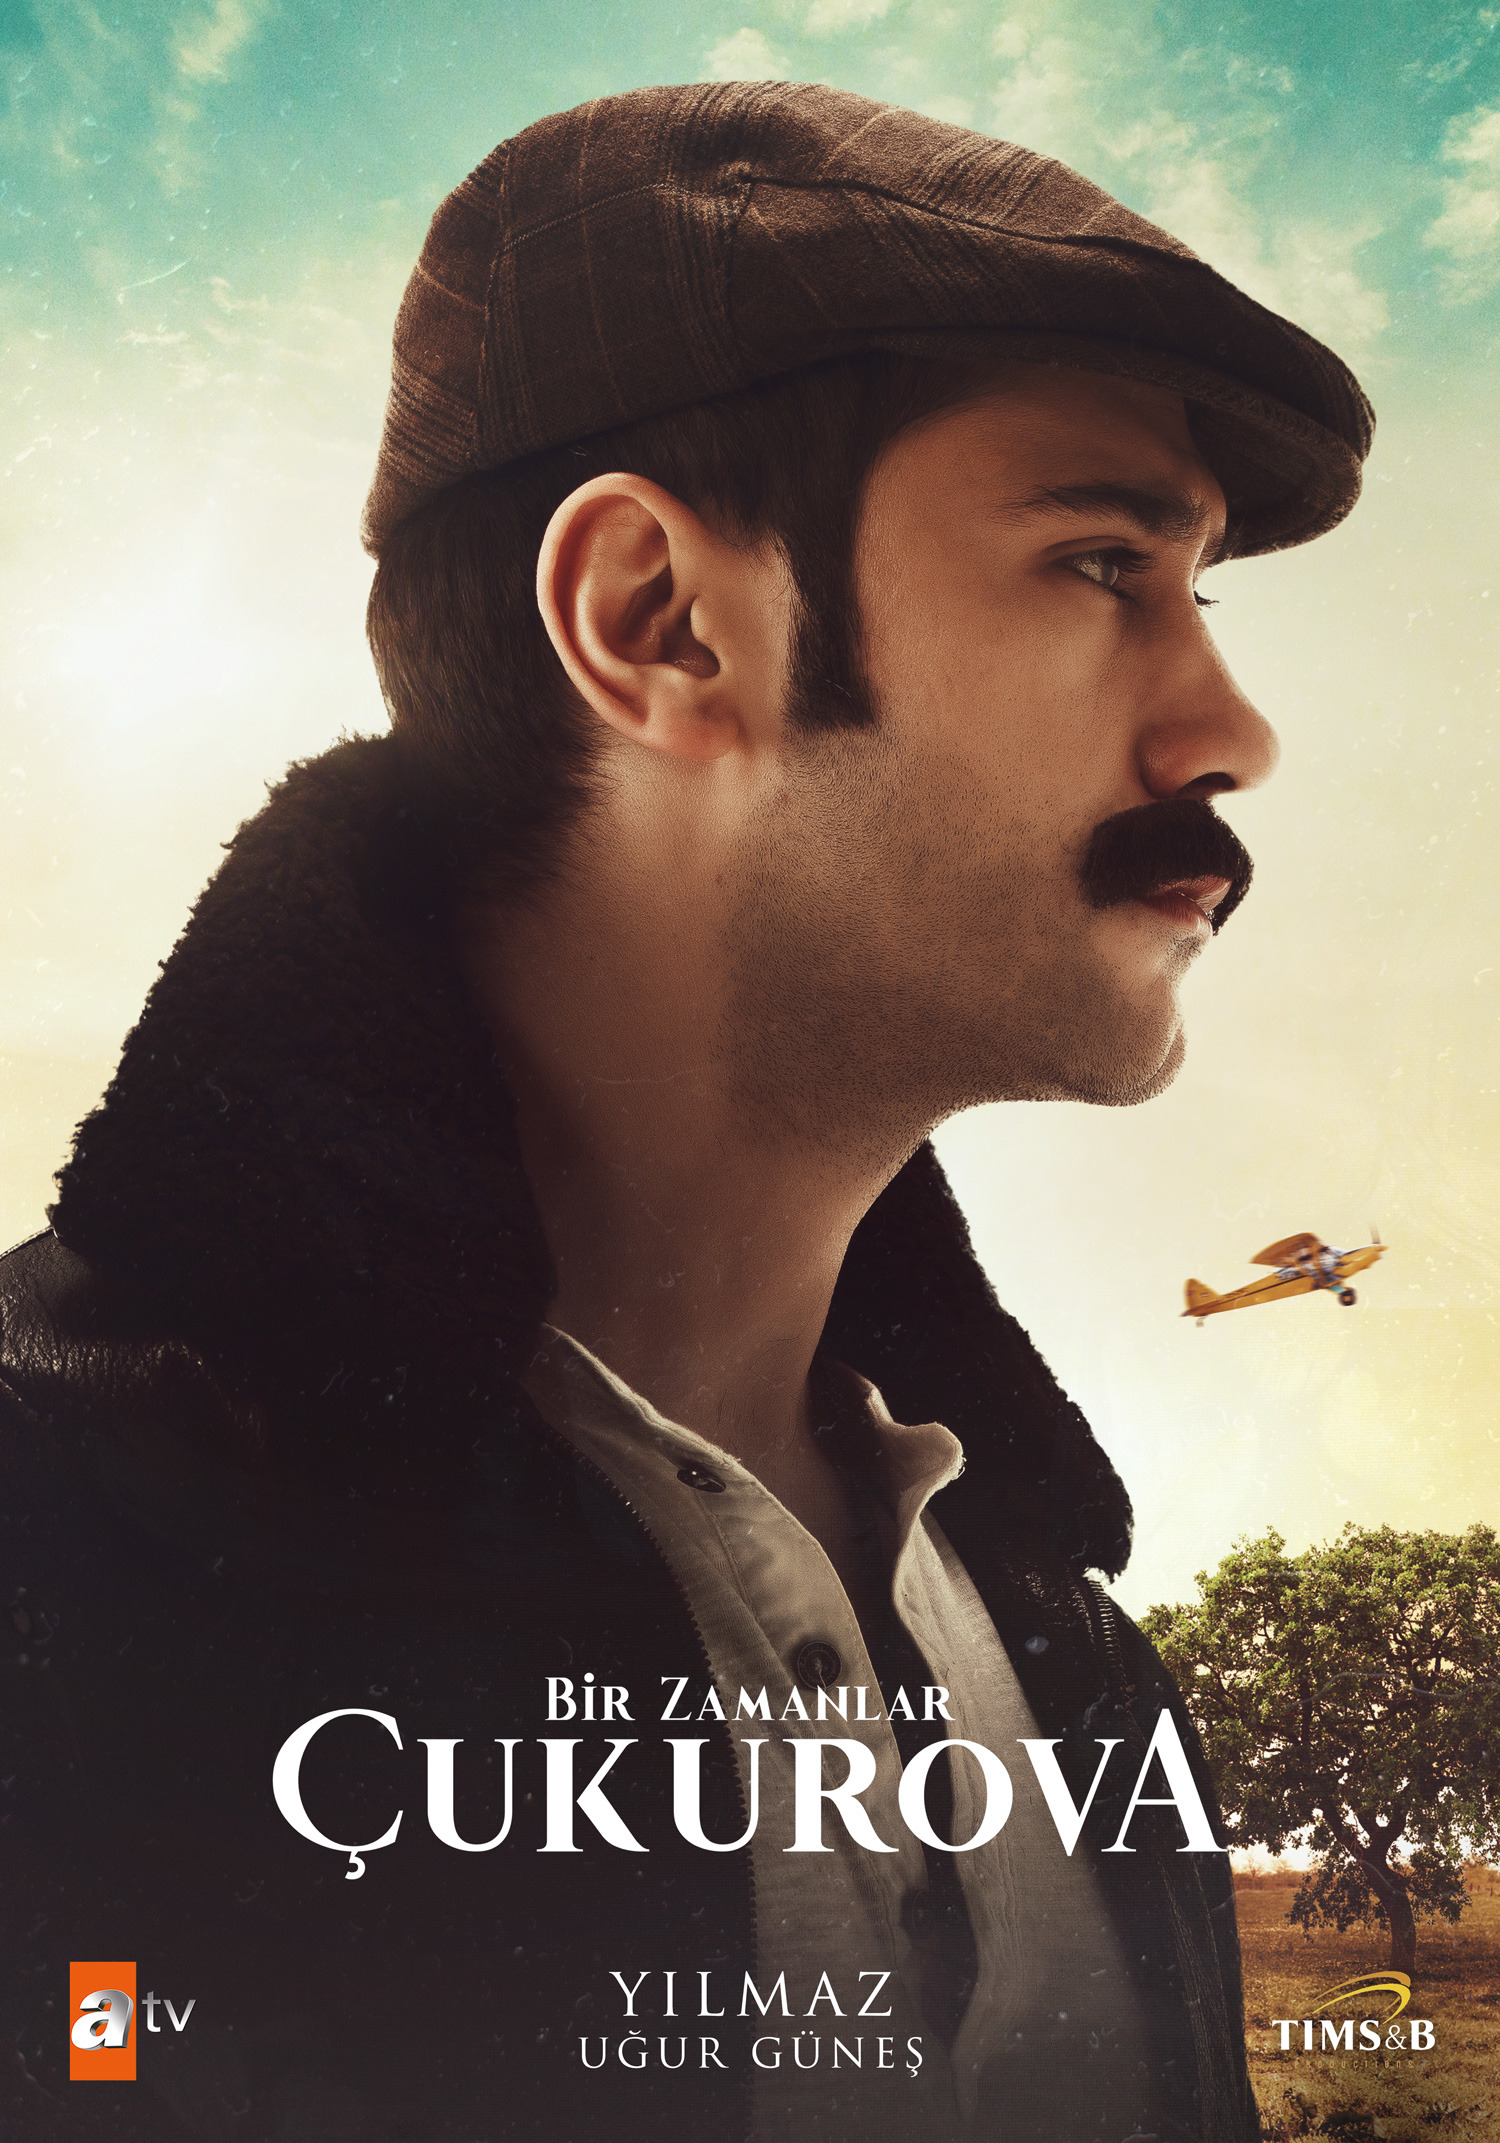 Mega Sized TV Poster Image for Bir zamanlar Çukurova (#11 of 12)